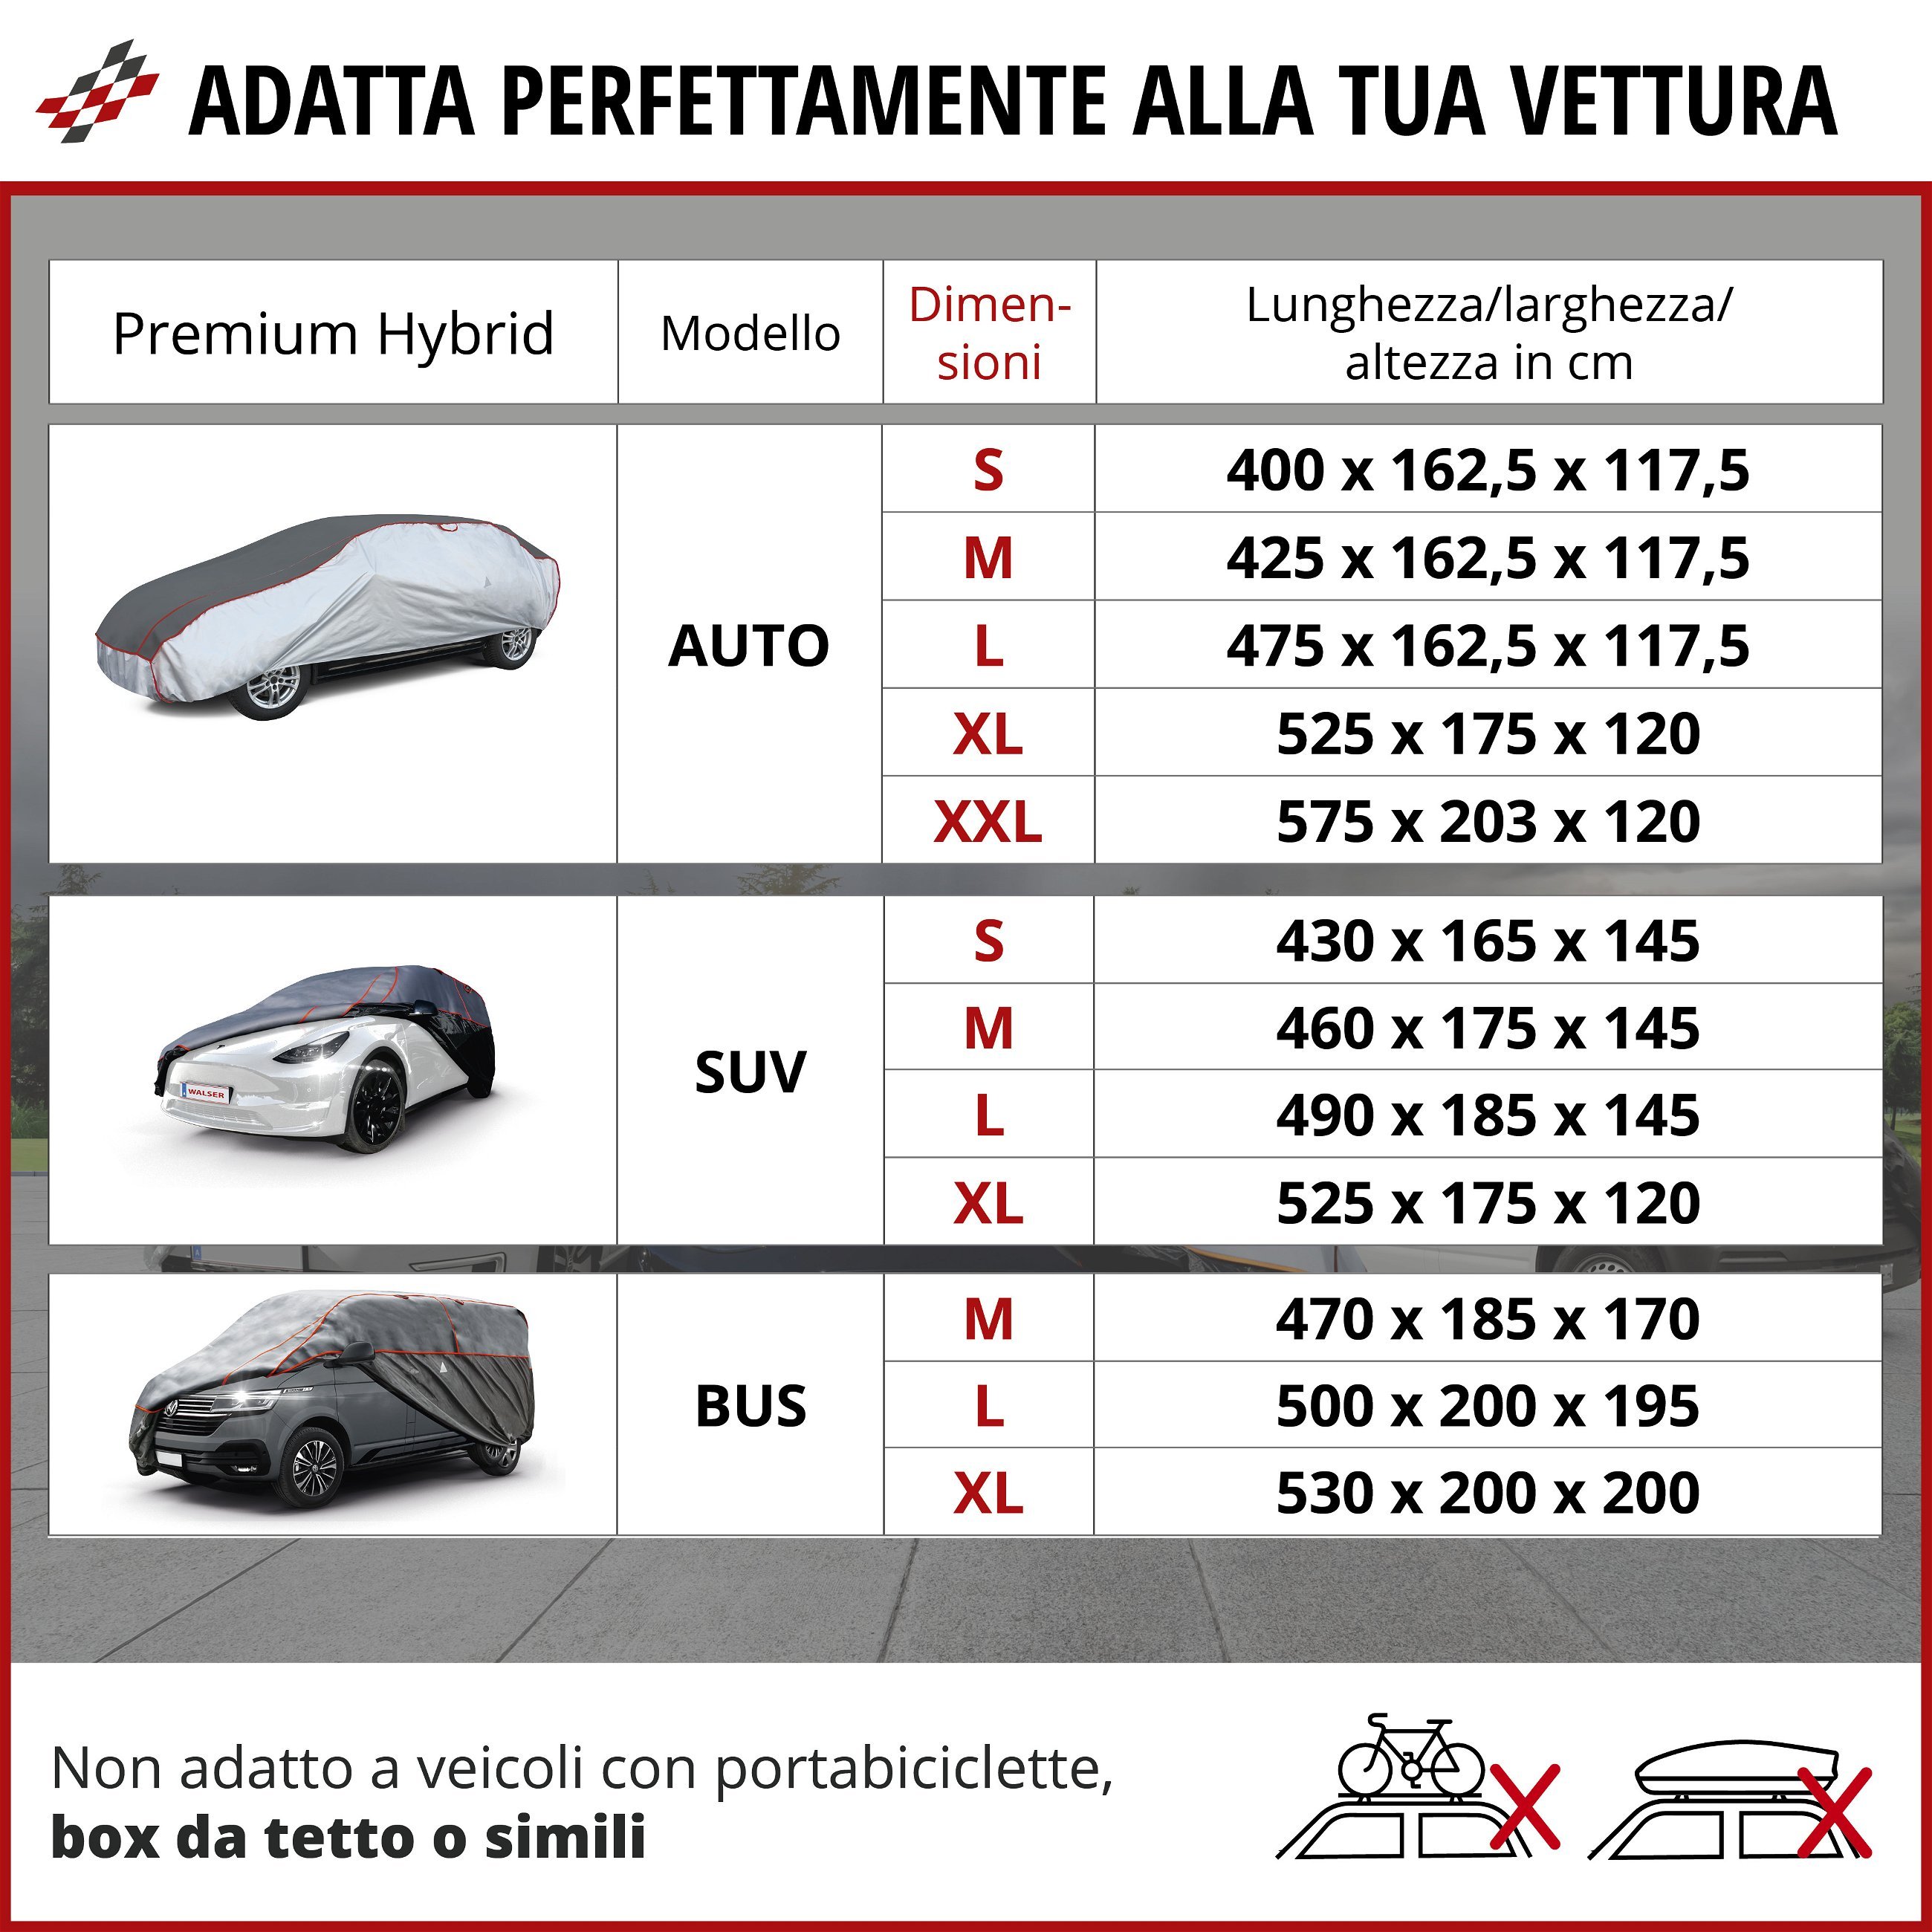 Telo Copriauto antigrandine Premium Hybrid SUV misura M